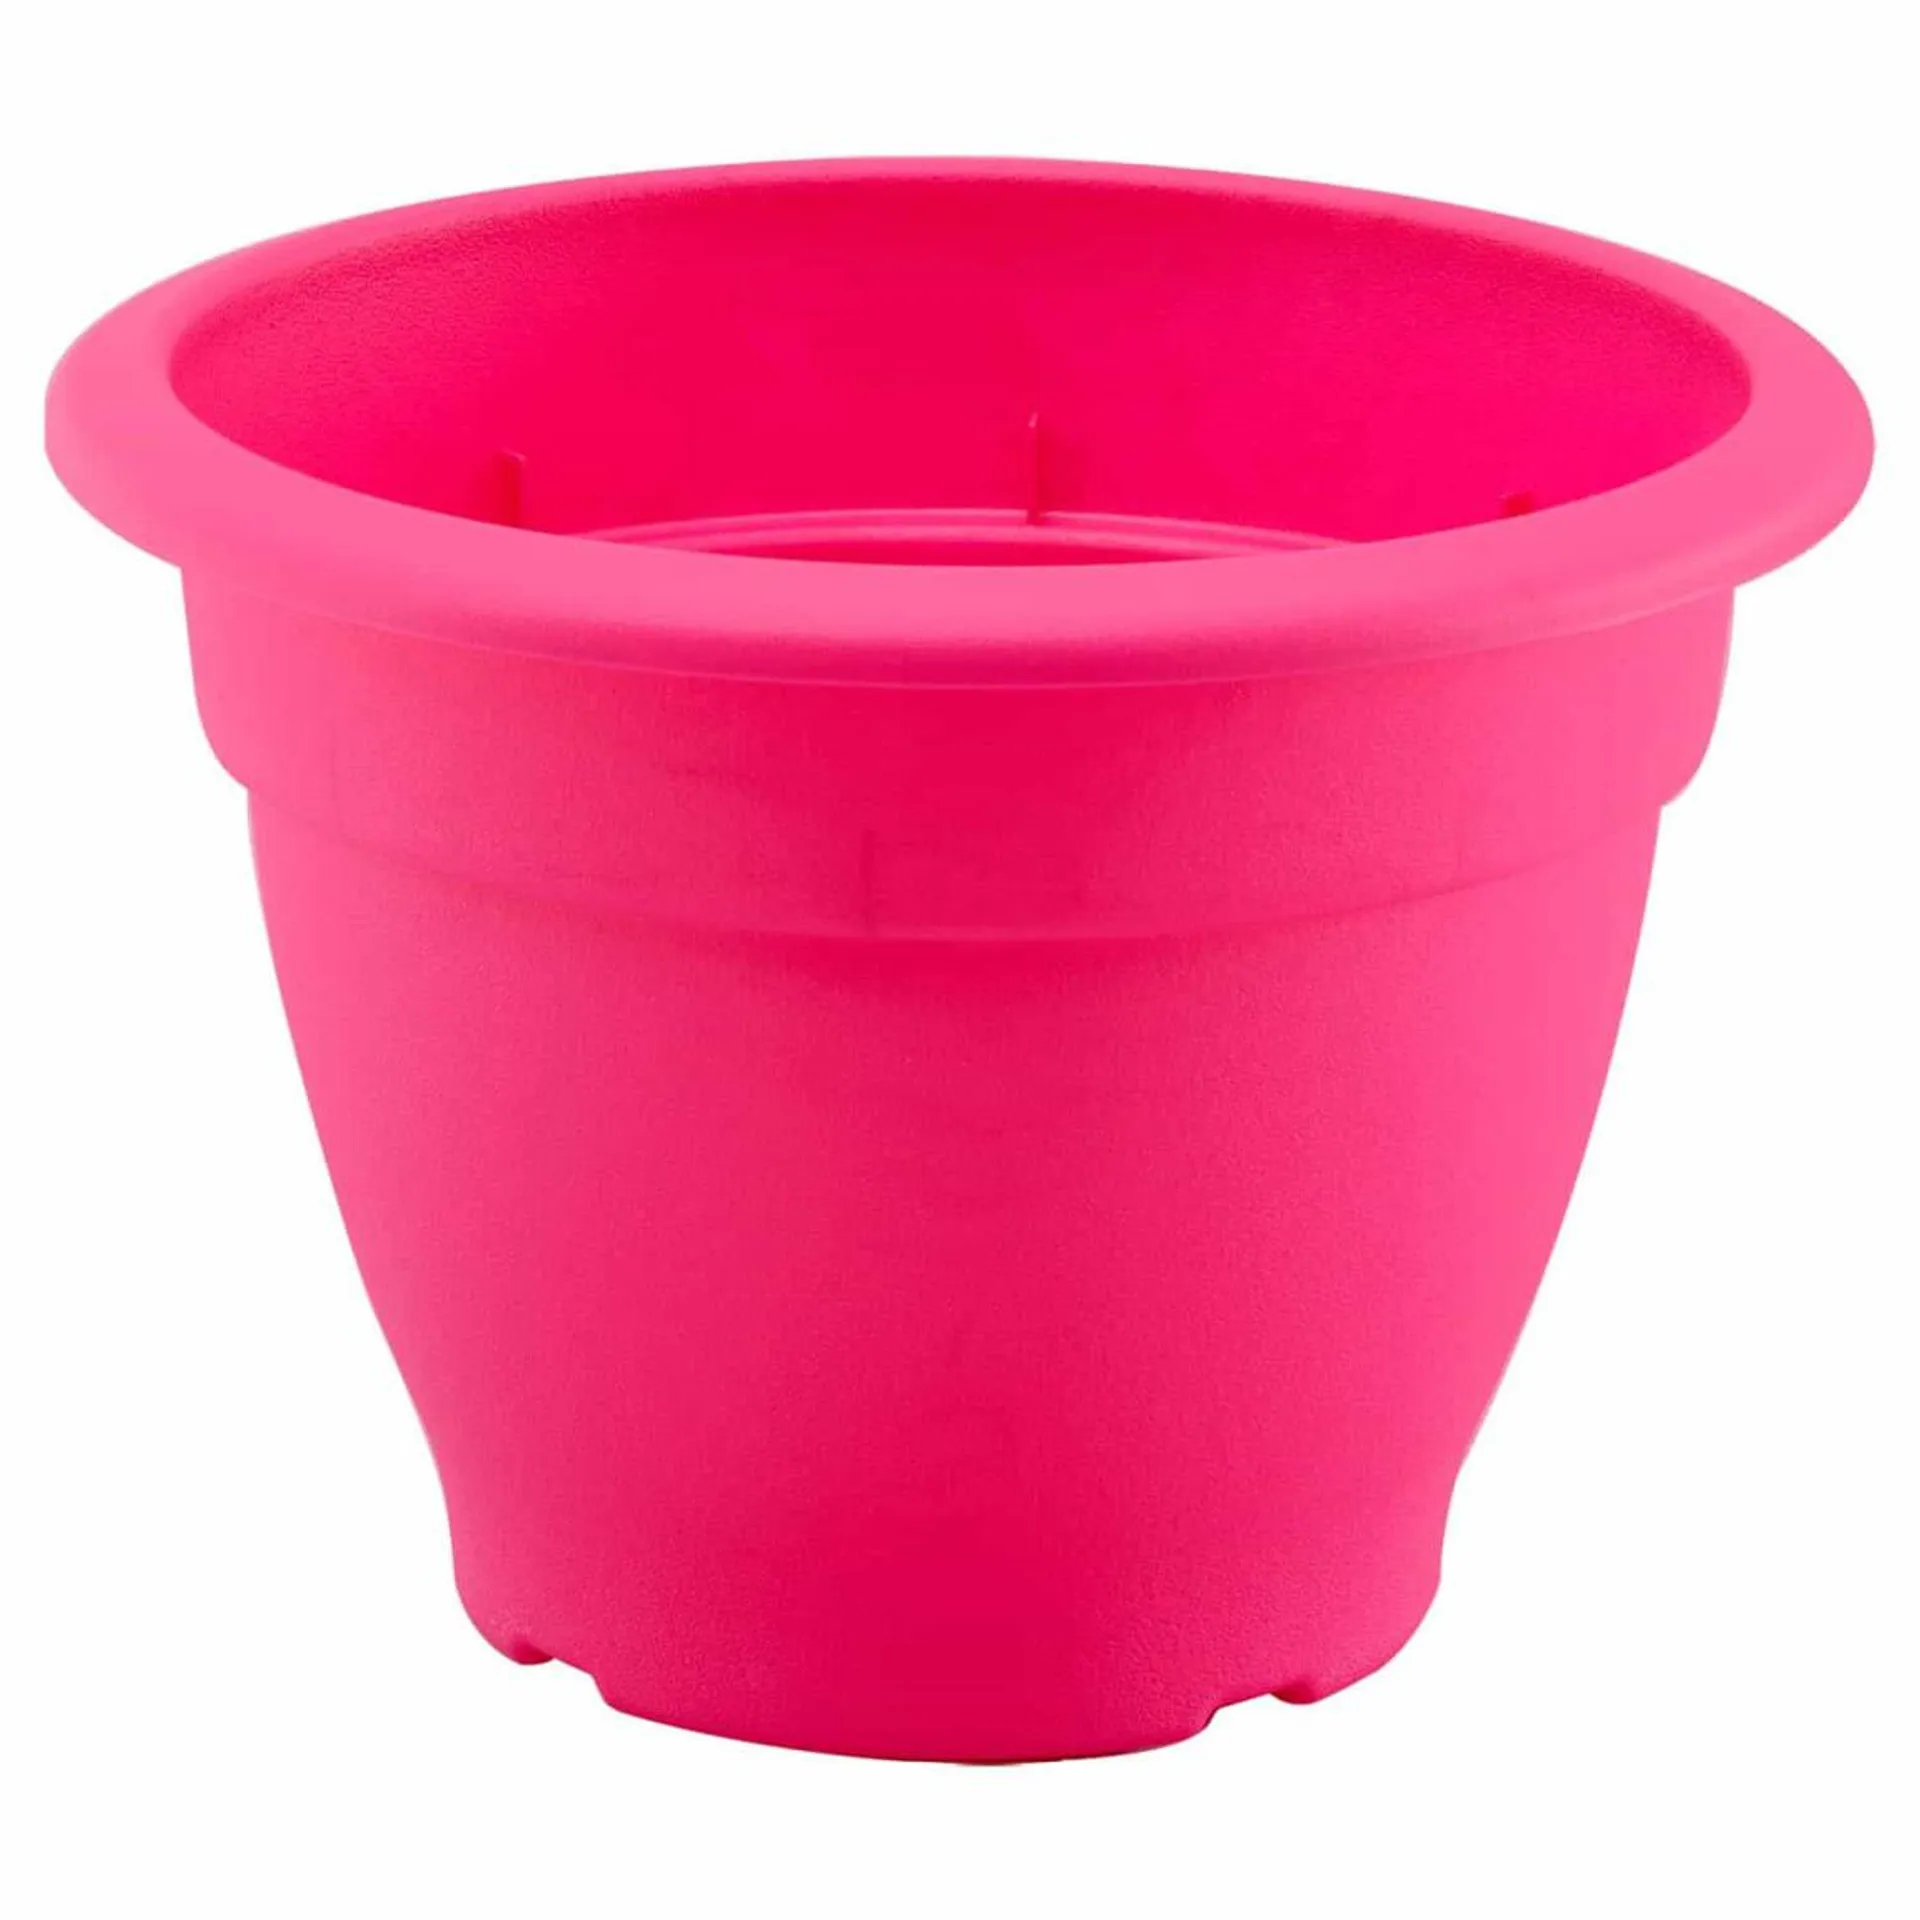 Bell Pot Round Planter 30cm - Pink